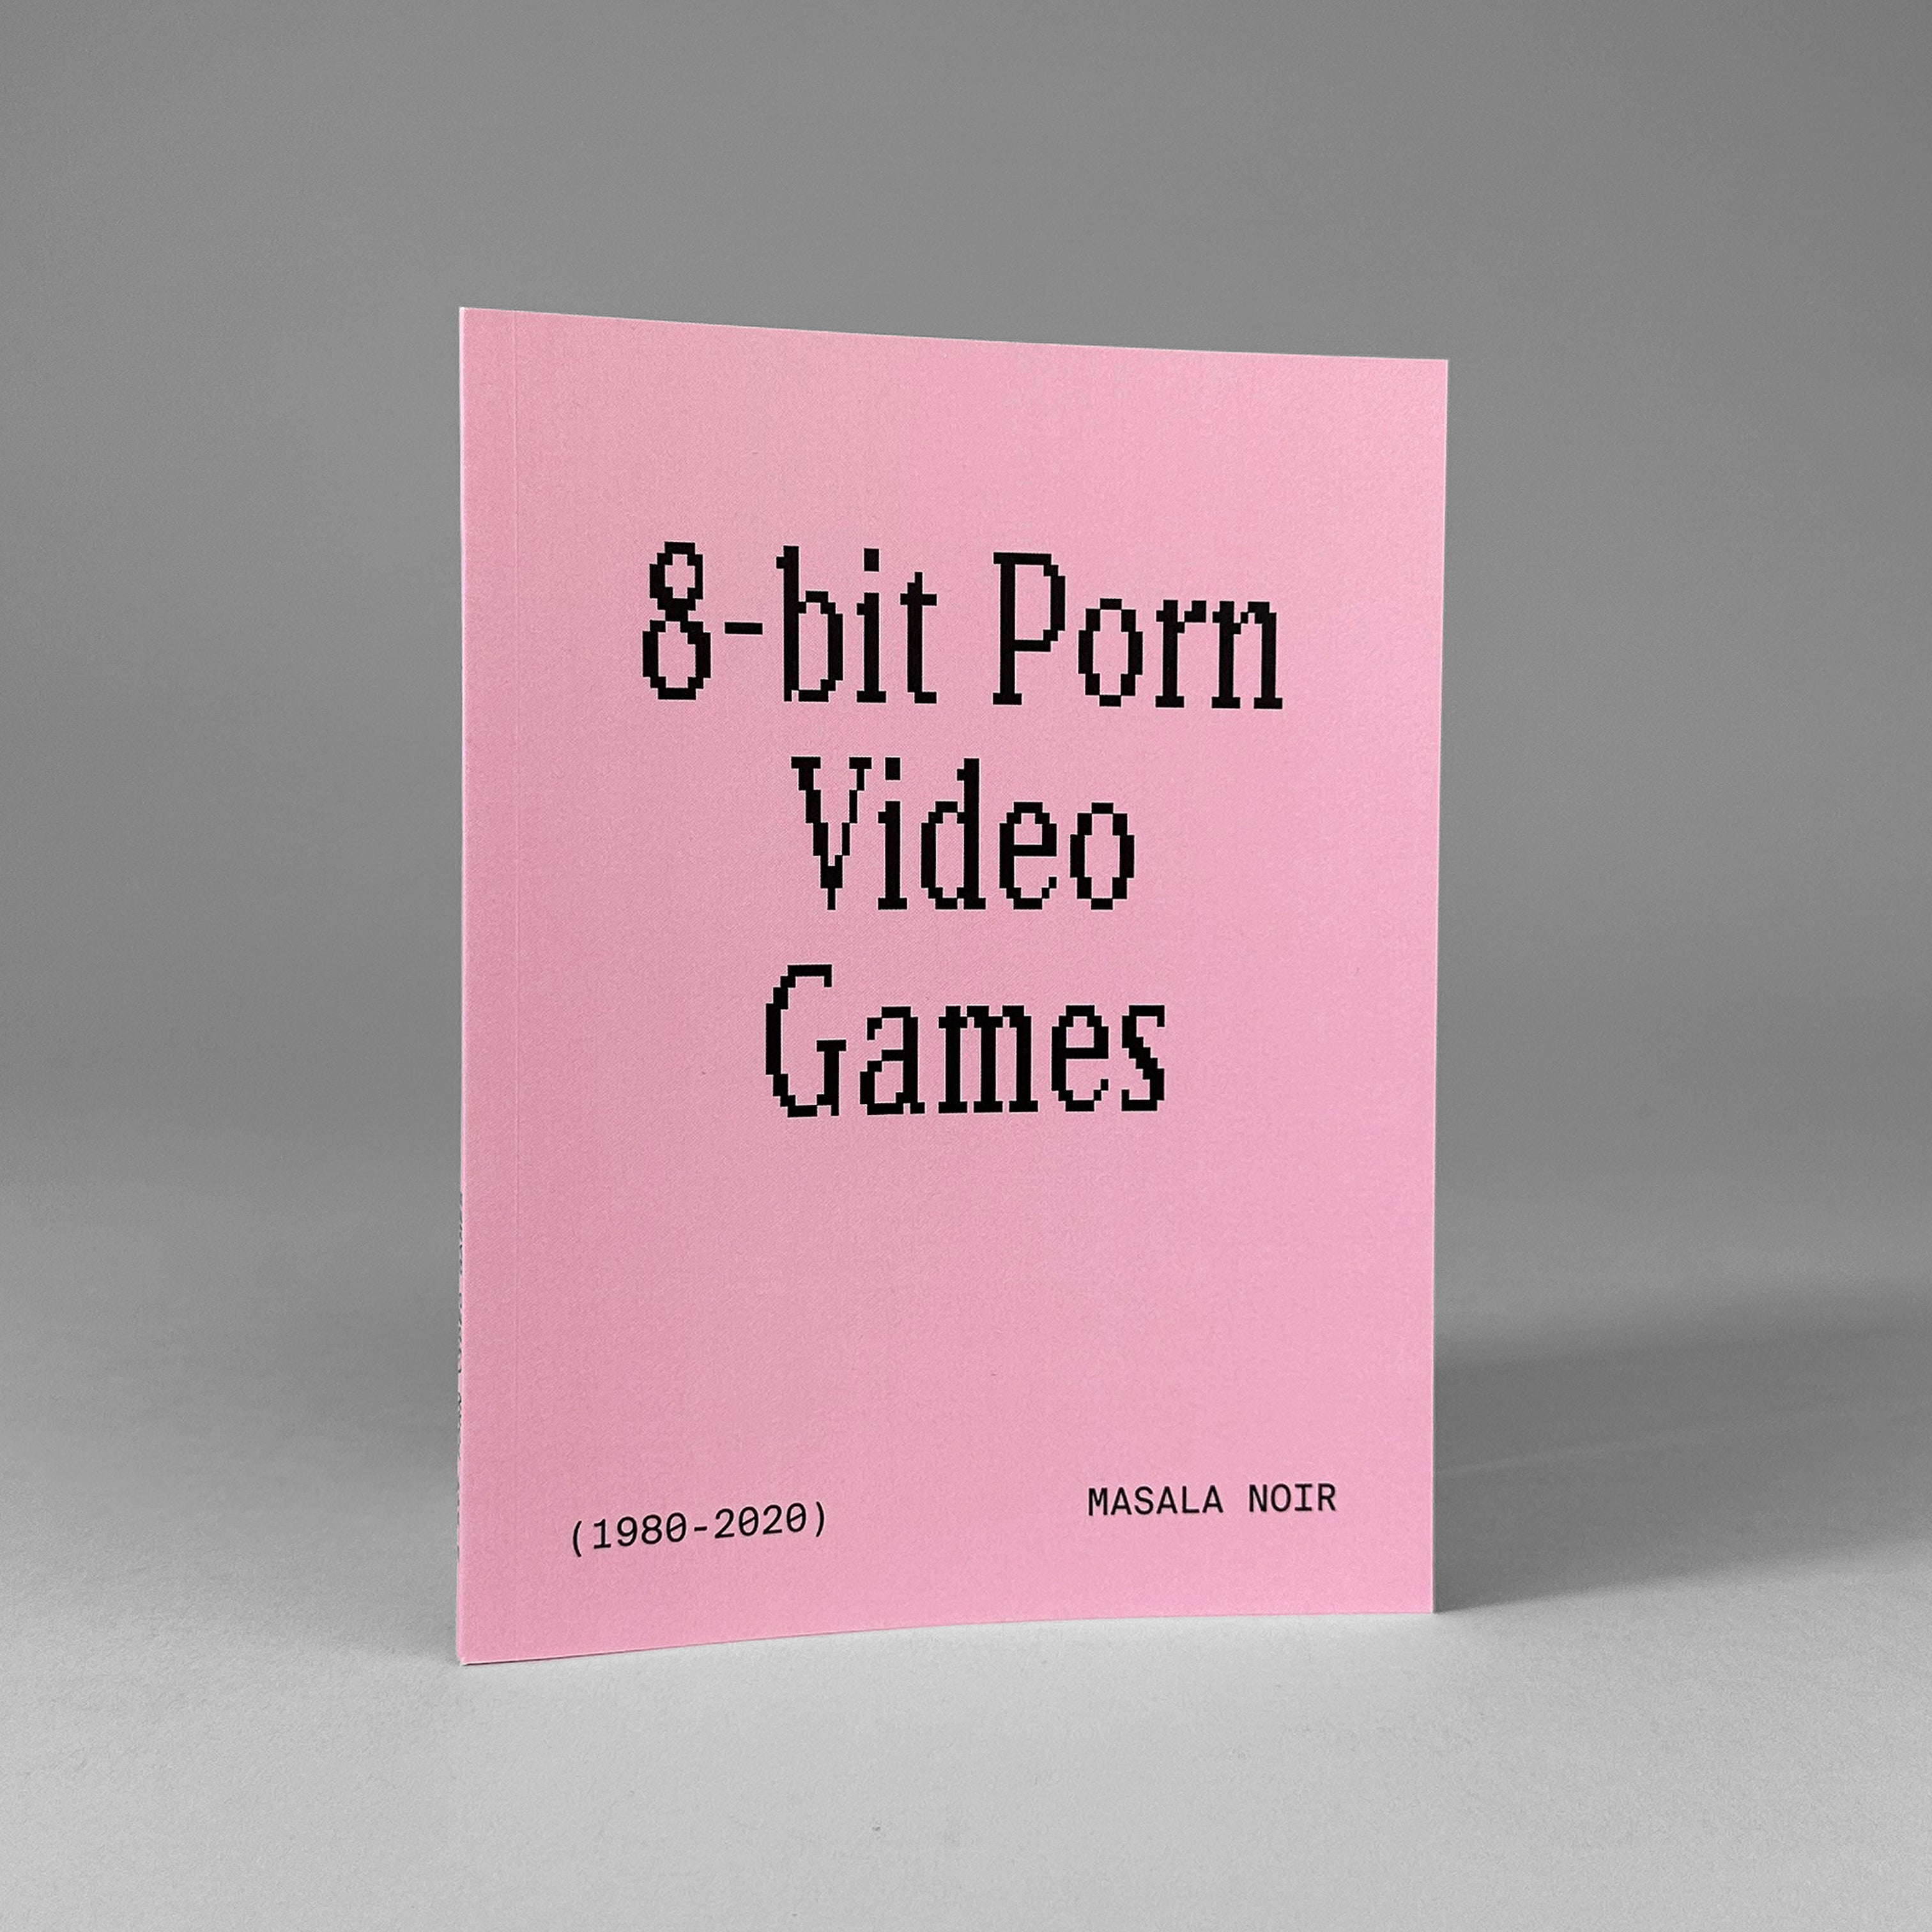 Prn Vedios - 8-bit Porn Video Games (1980-2020) â€“ Draw Down